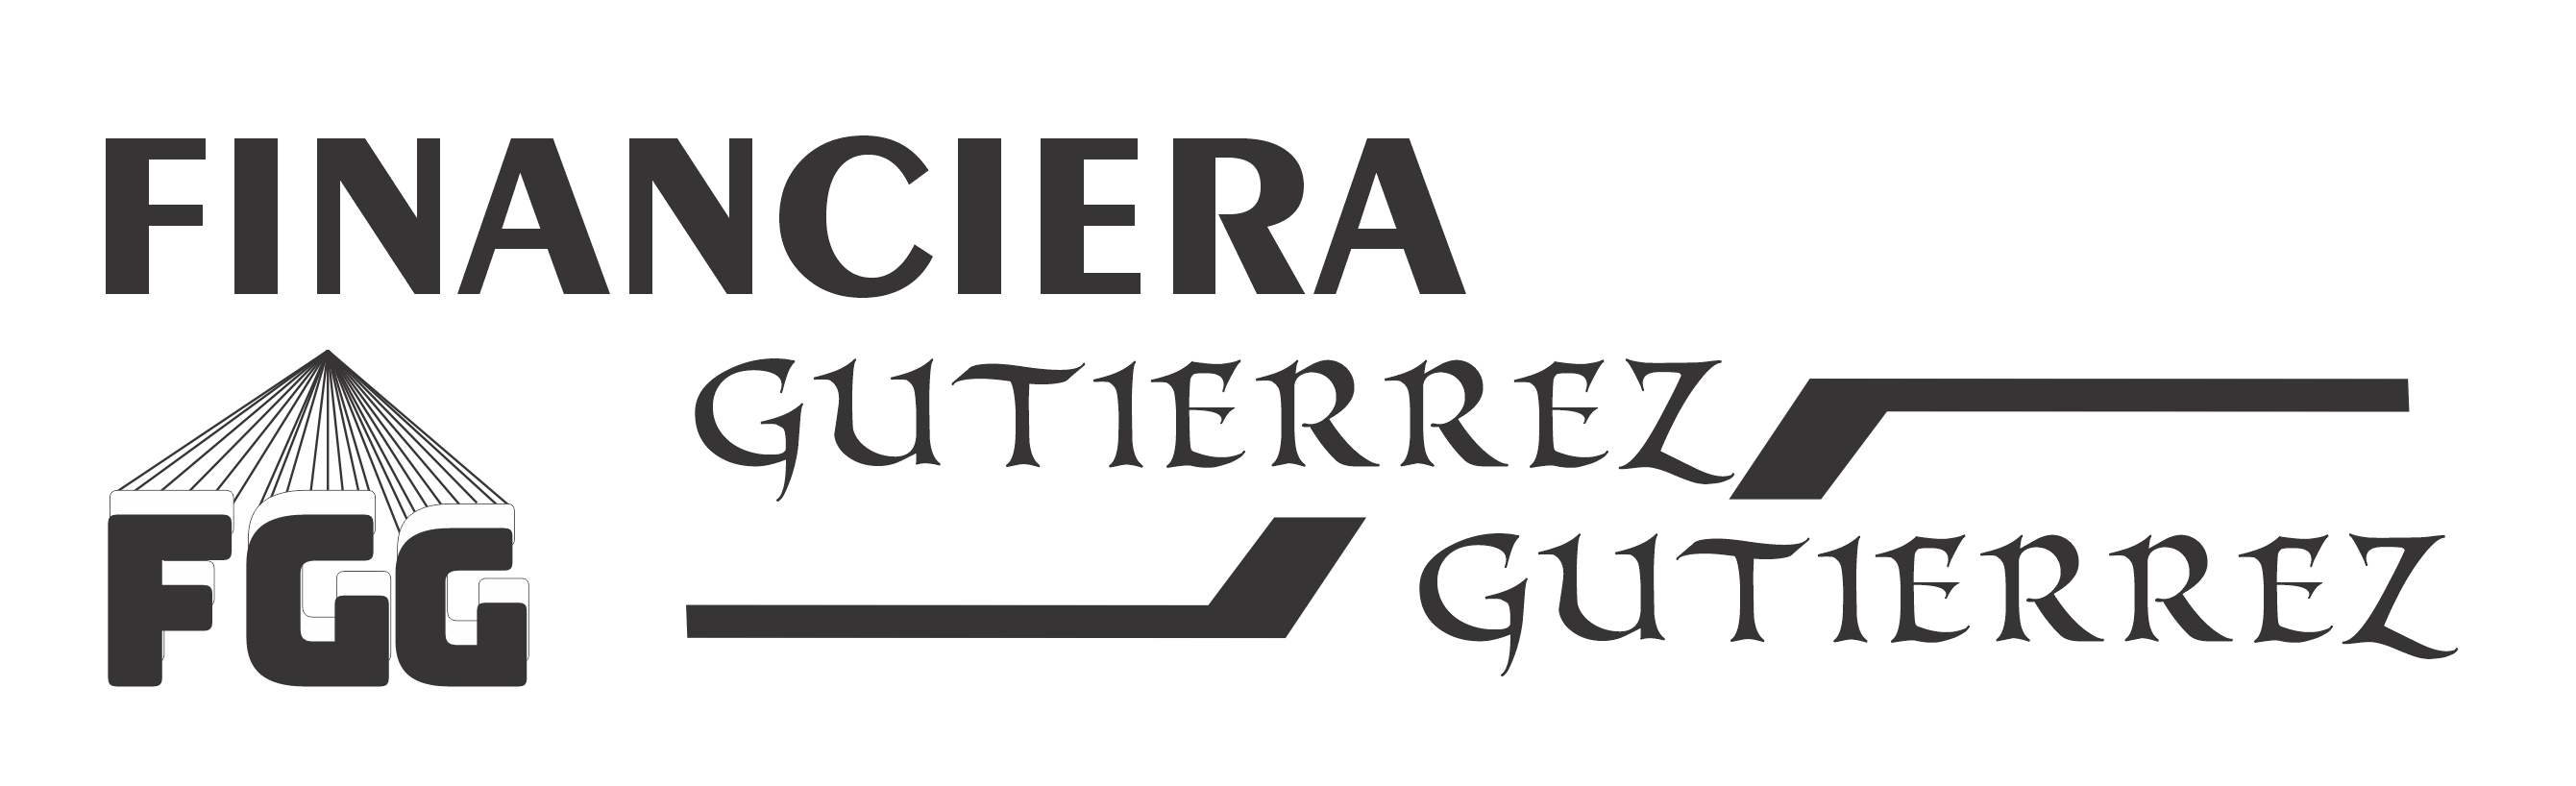 Financiera Gutierrez